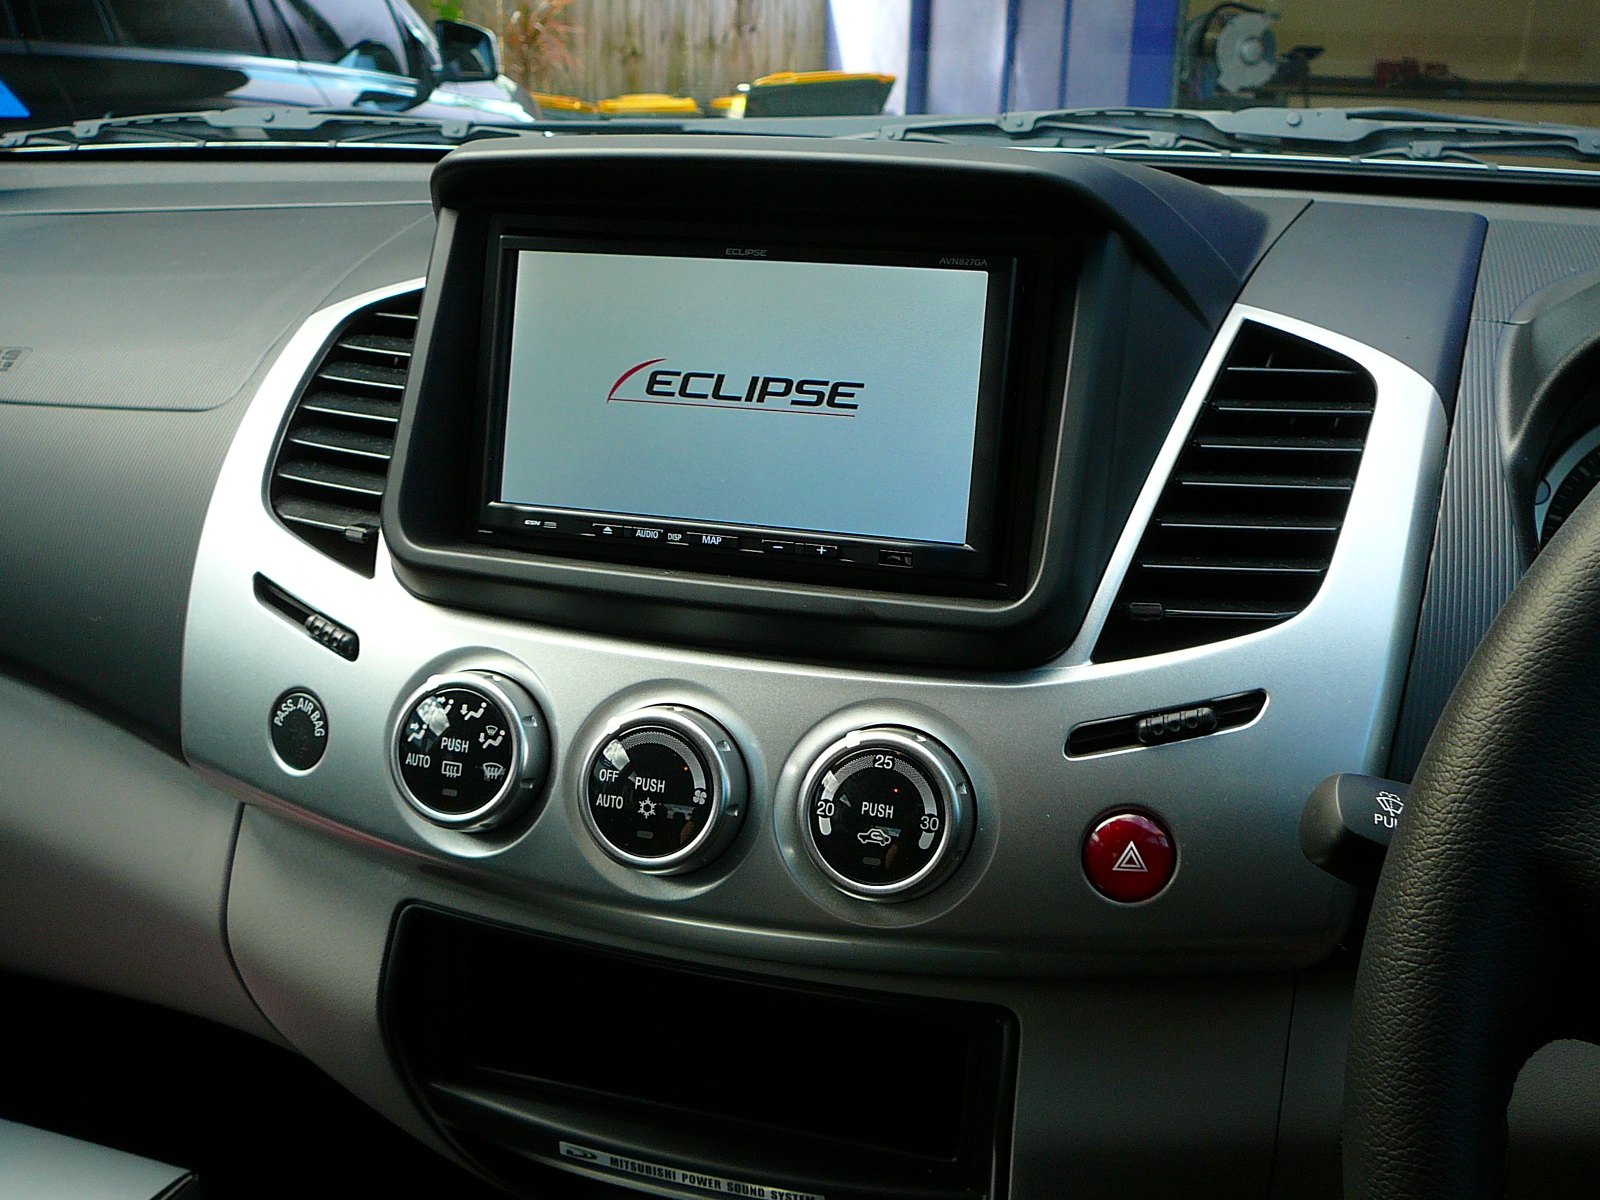 Mitsubishi Triton 2012 Eclipse GPS Navigation System & Reverse Camera